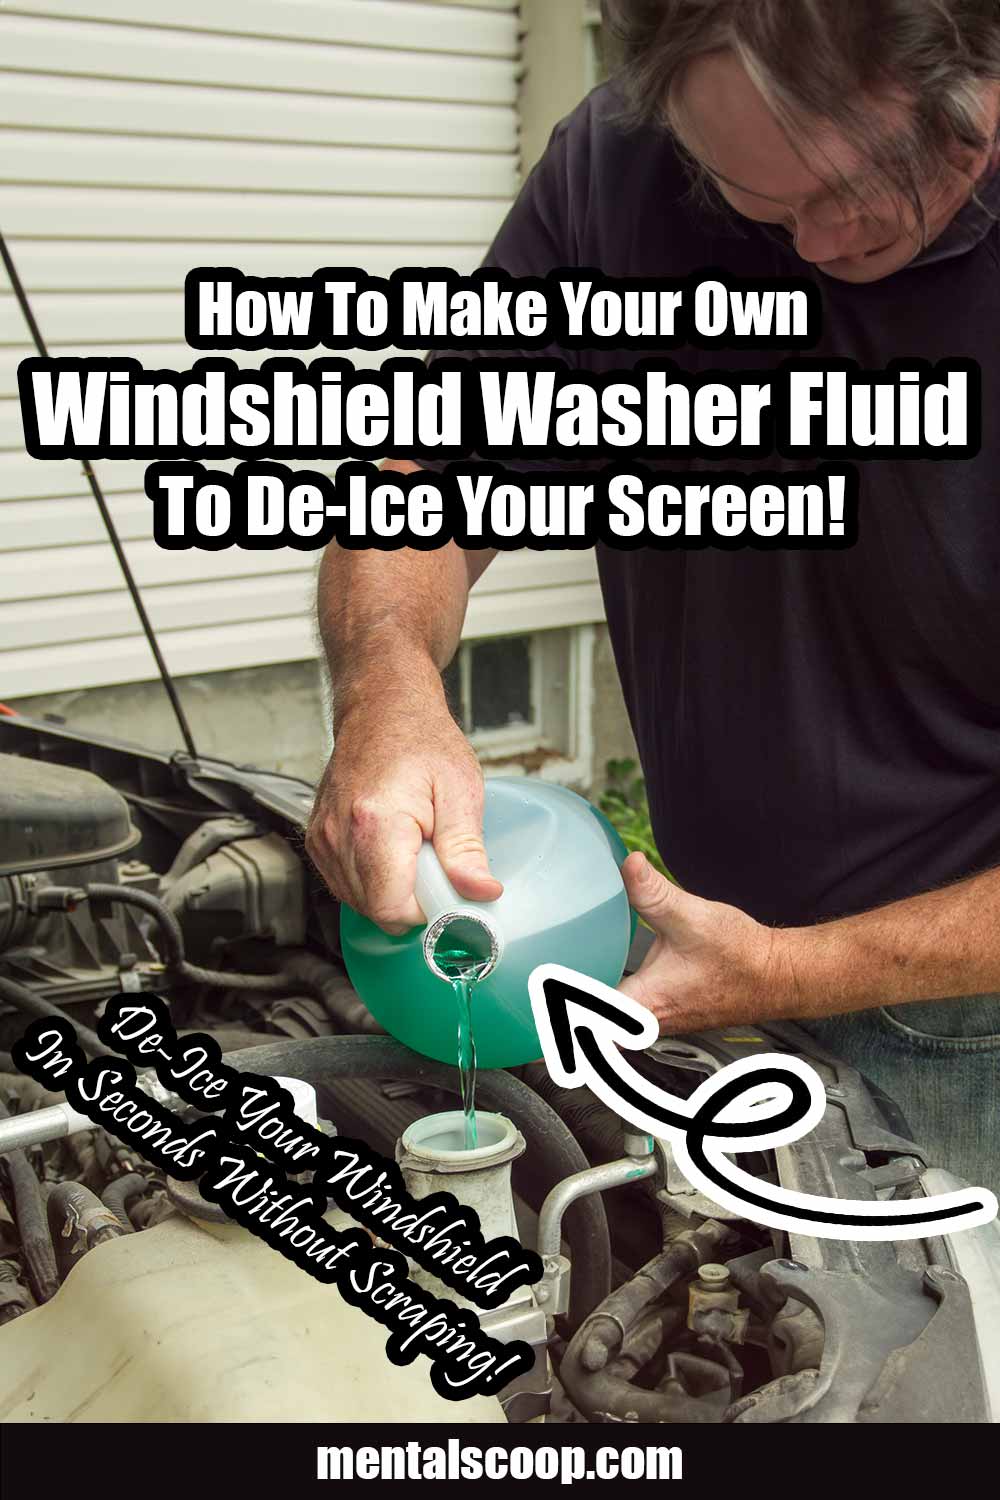 DIY windshield washer fluid?